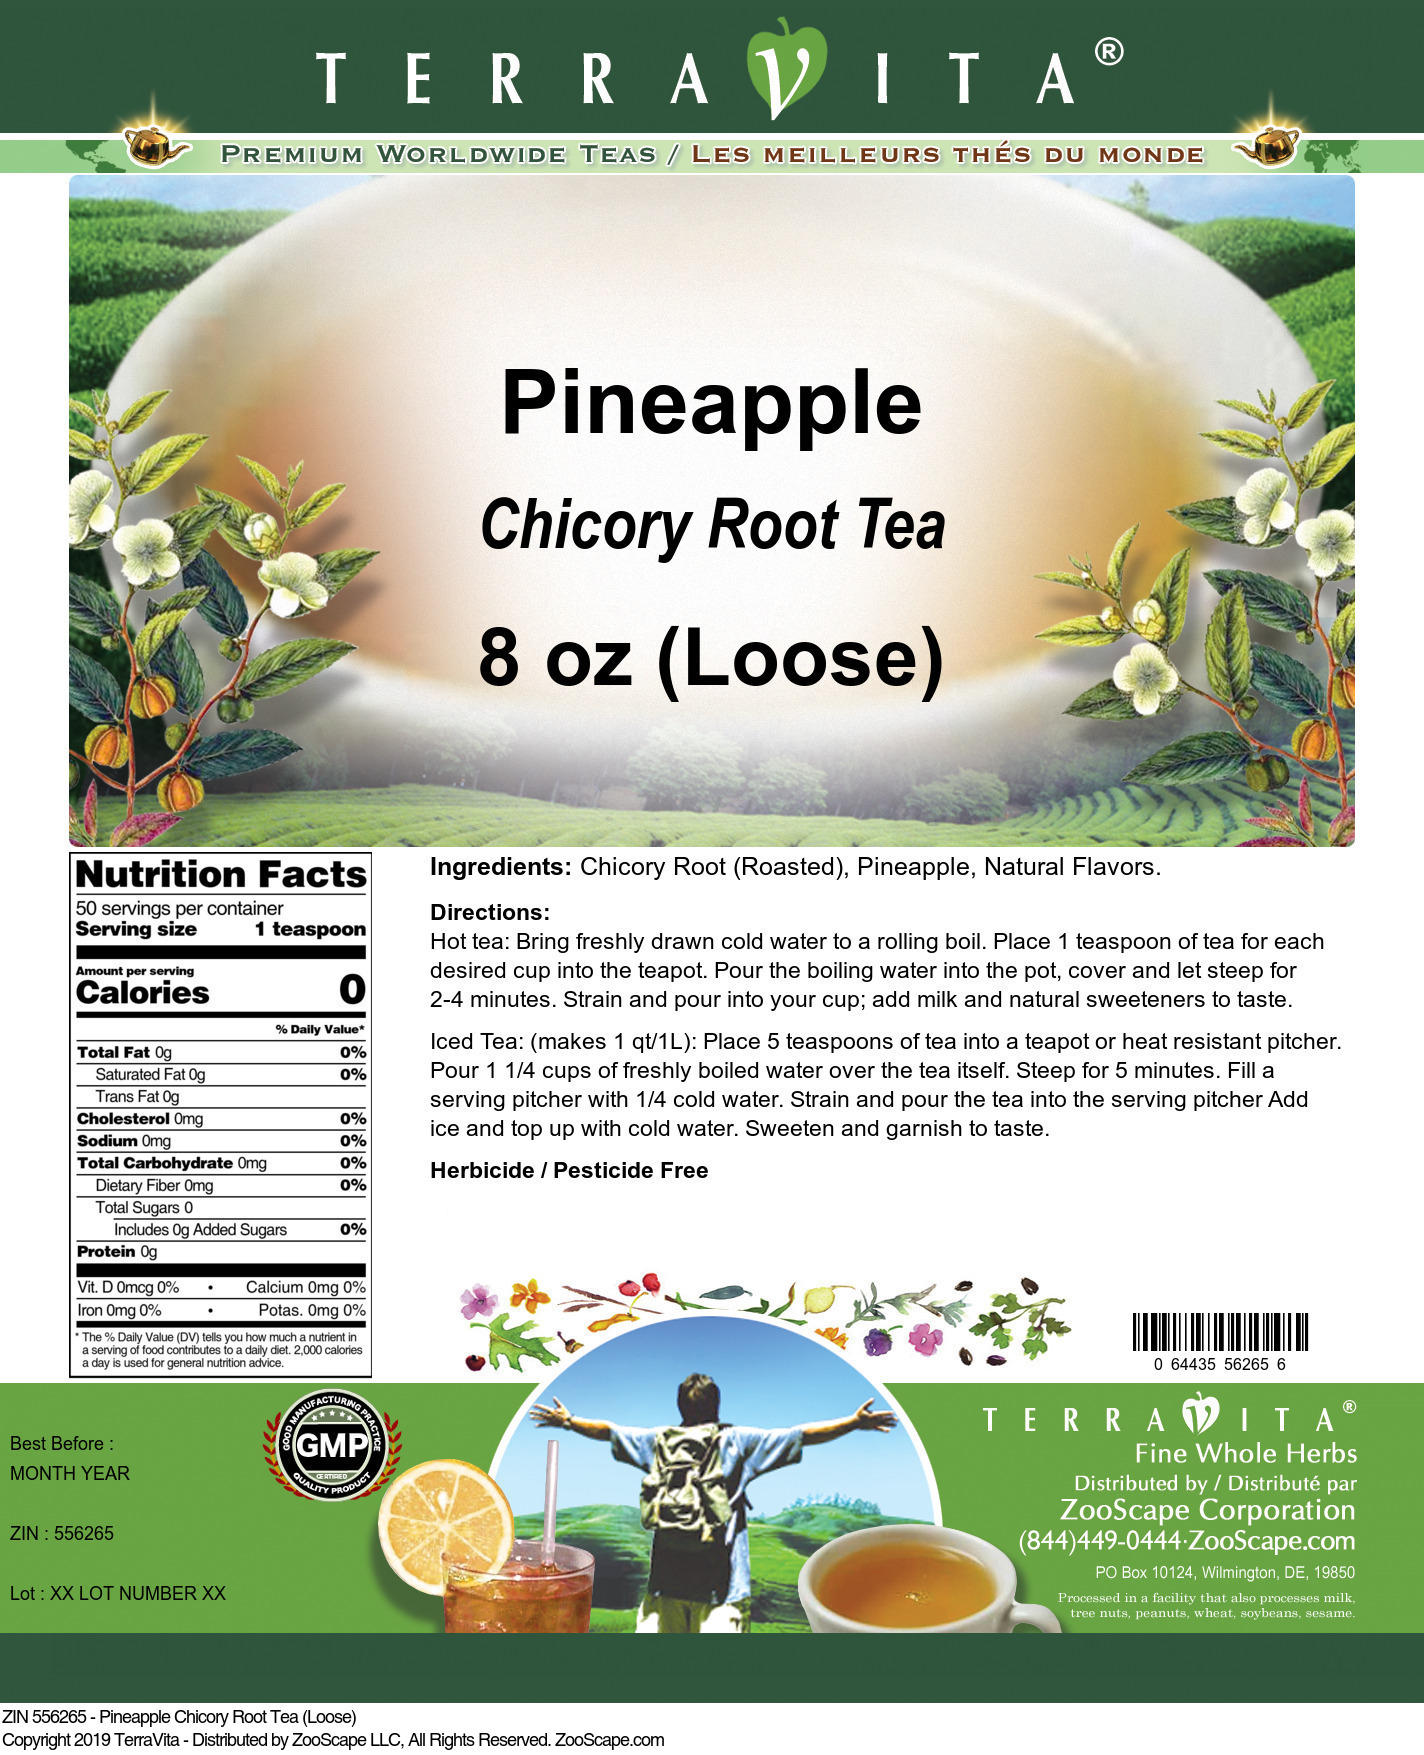 Pineapple Chicory Root Tea (Loose) - Label